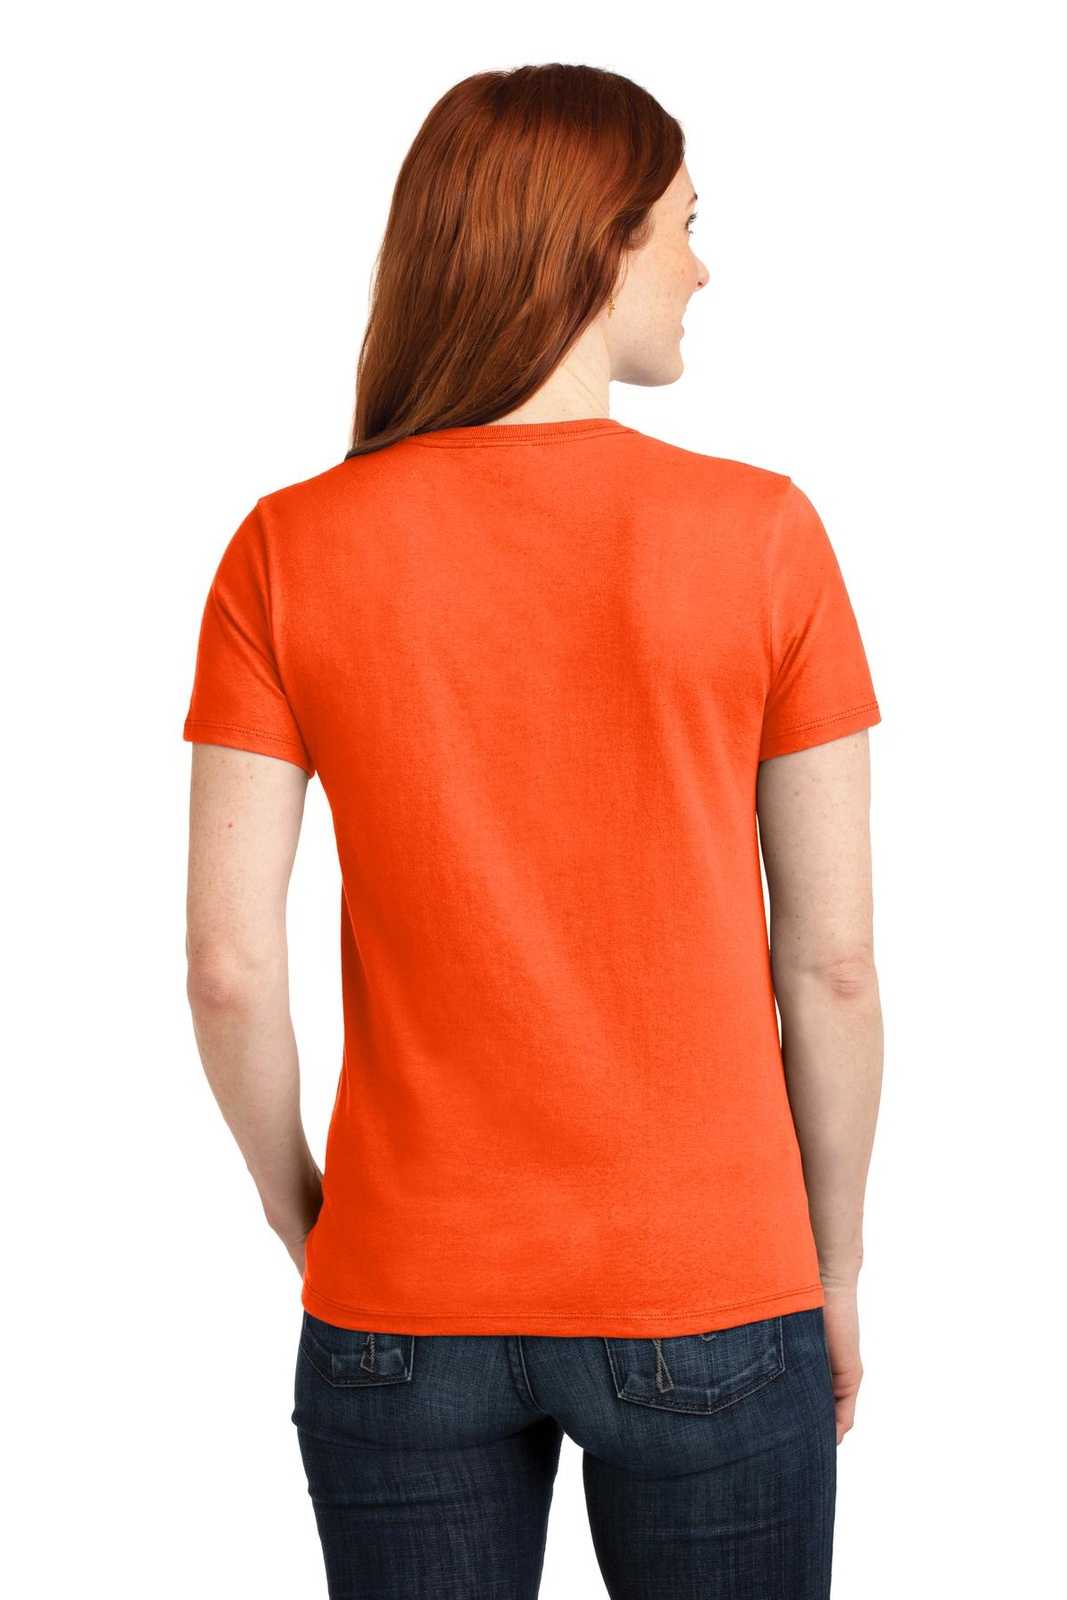 Port & Company LPC55 Ladies Core Blend Tee - Safety Orange - HIT a Double - 1